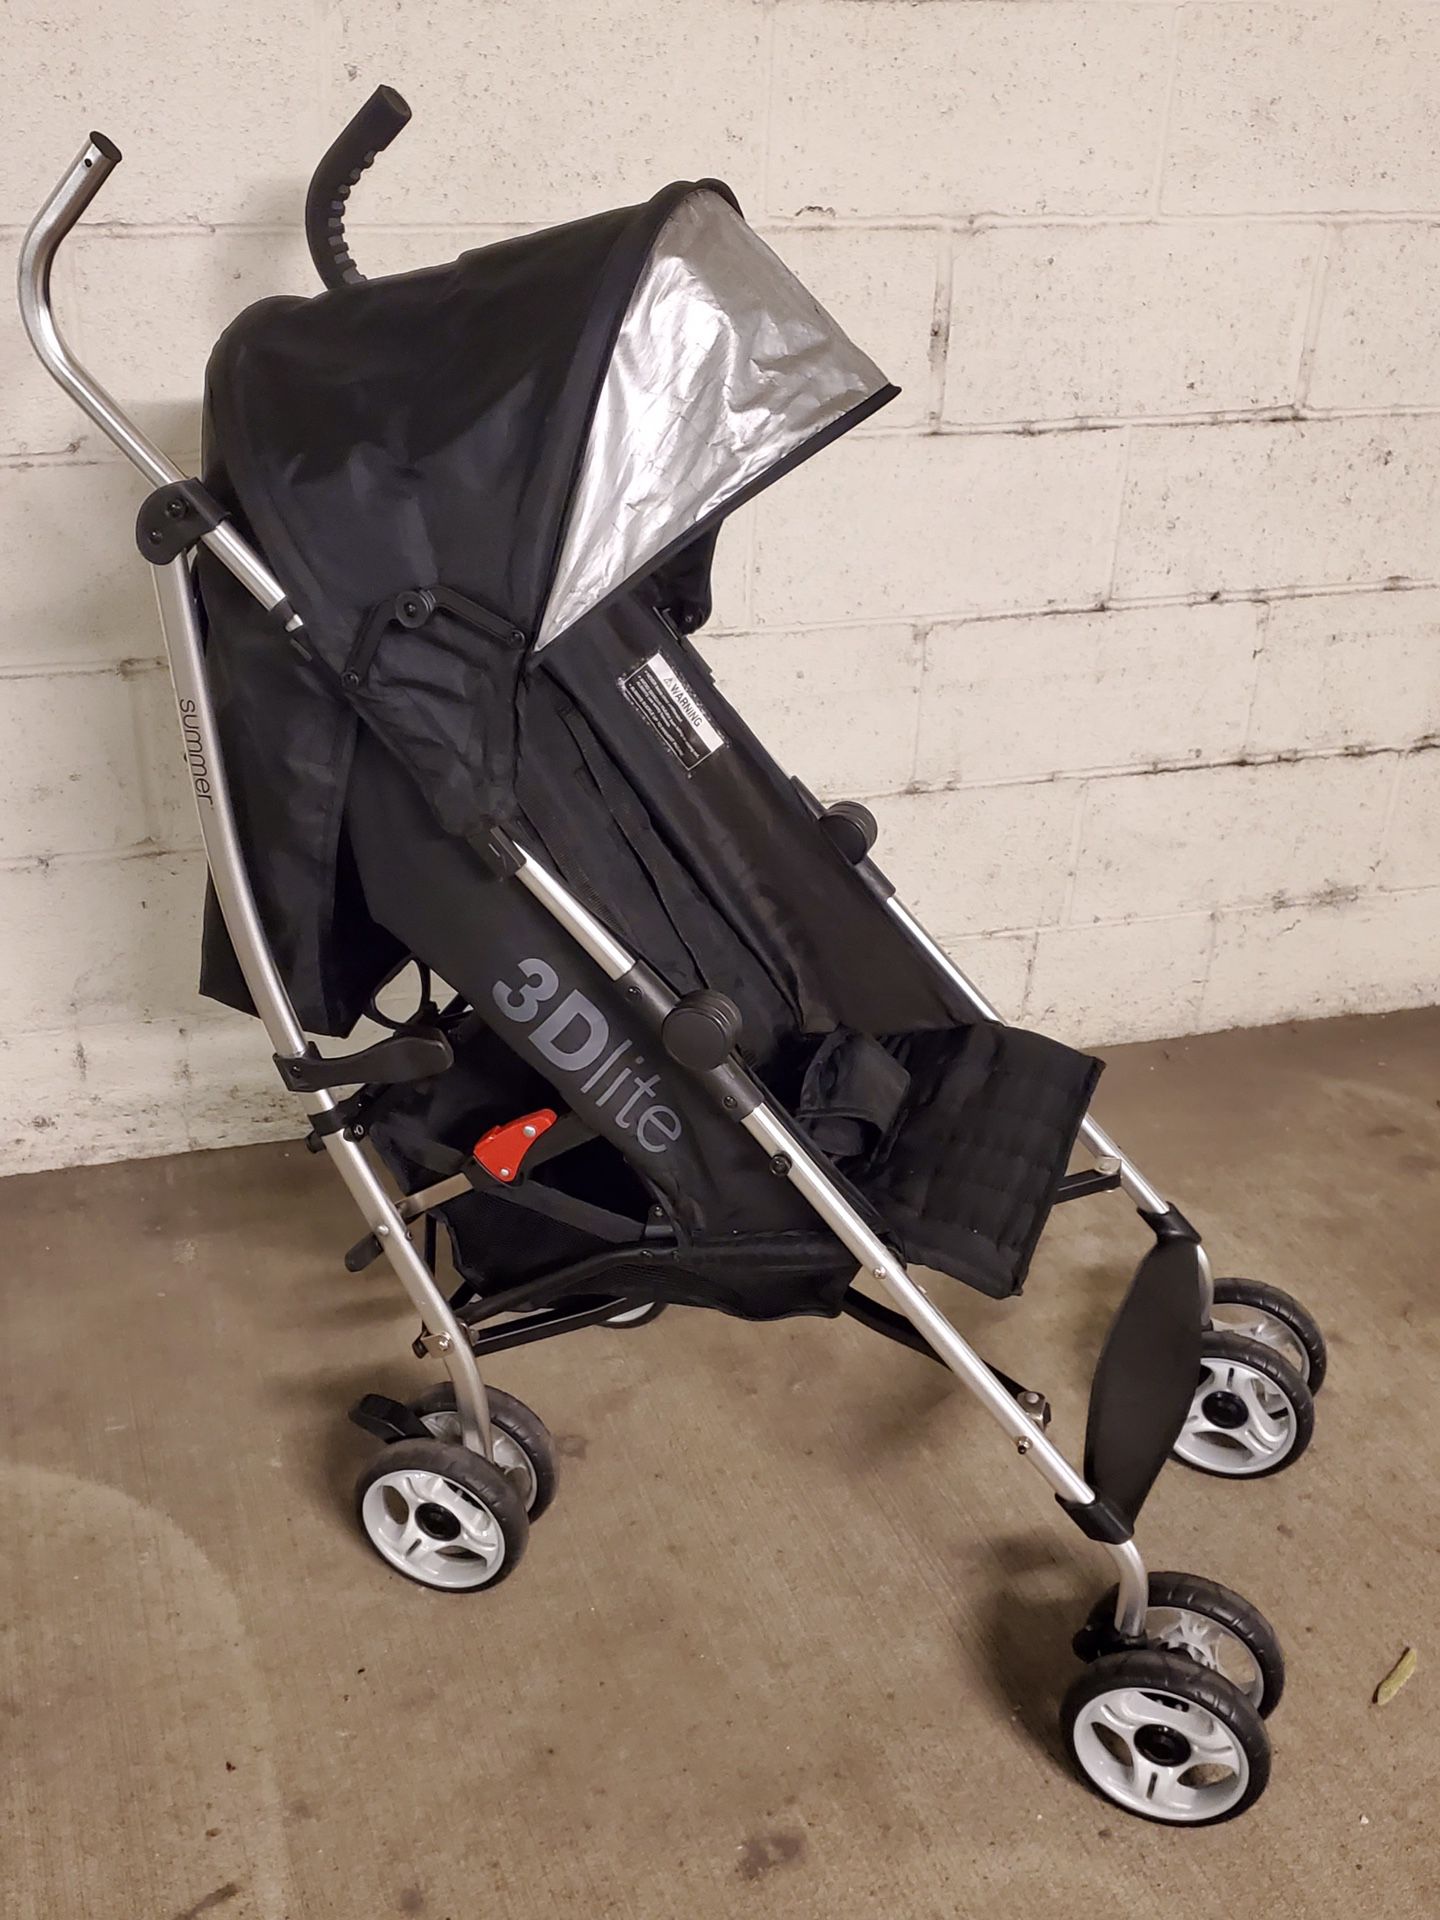 BLACK 3DLite Folding Baby Stroller w/Canopy - firm price.